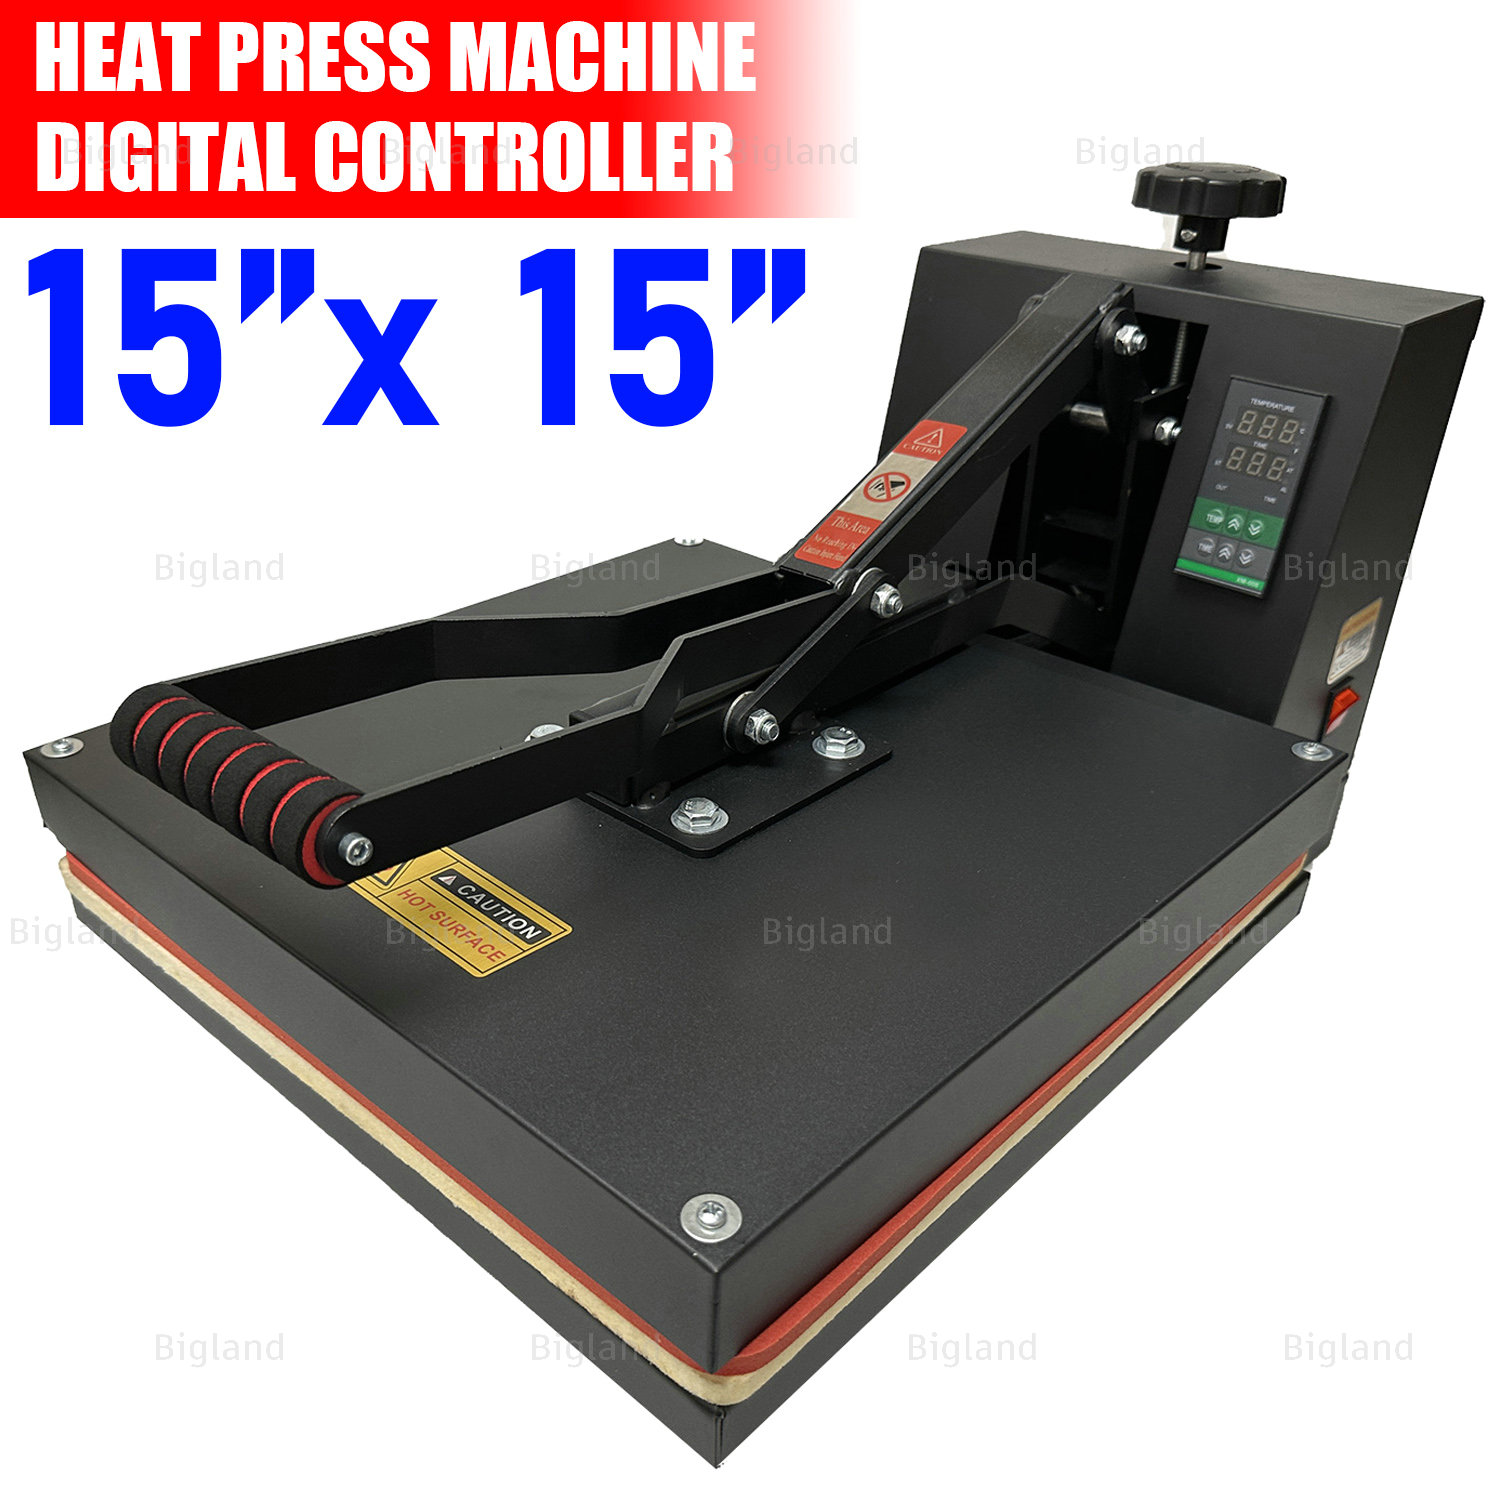 Bigland 15x15 Heat Press Transfer Digital Clamshell T-Shirt Sublimation Press Machine